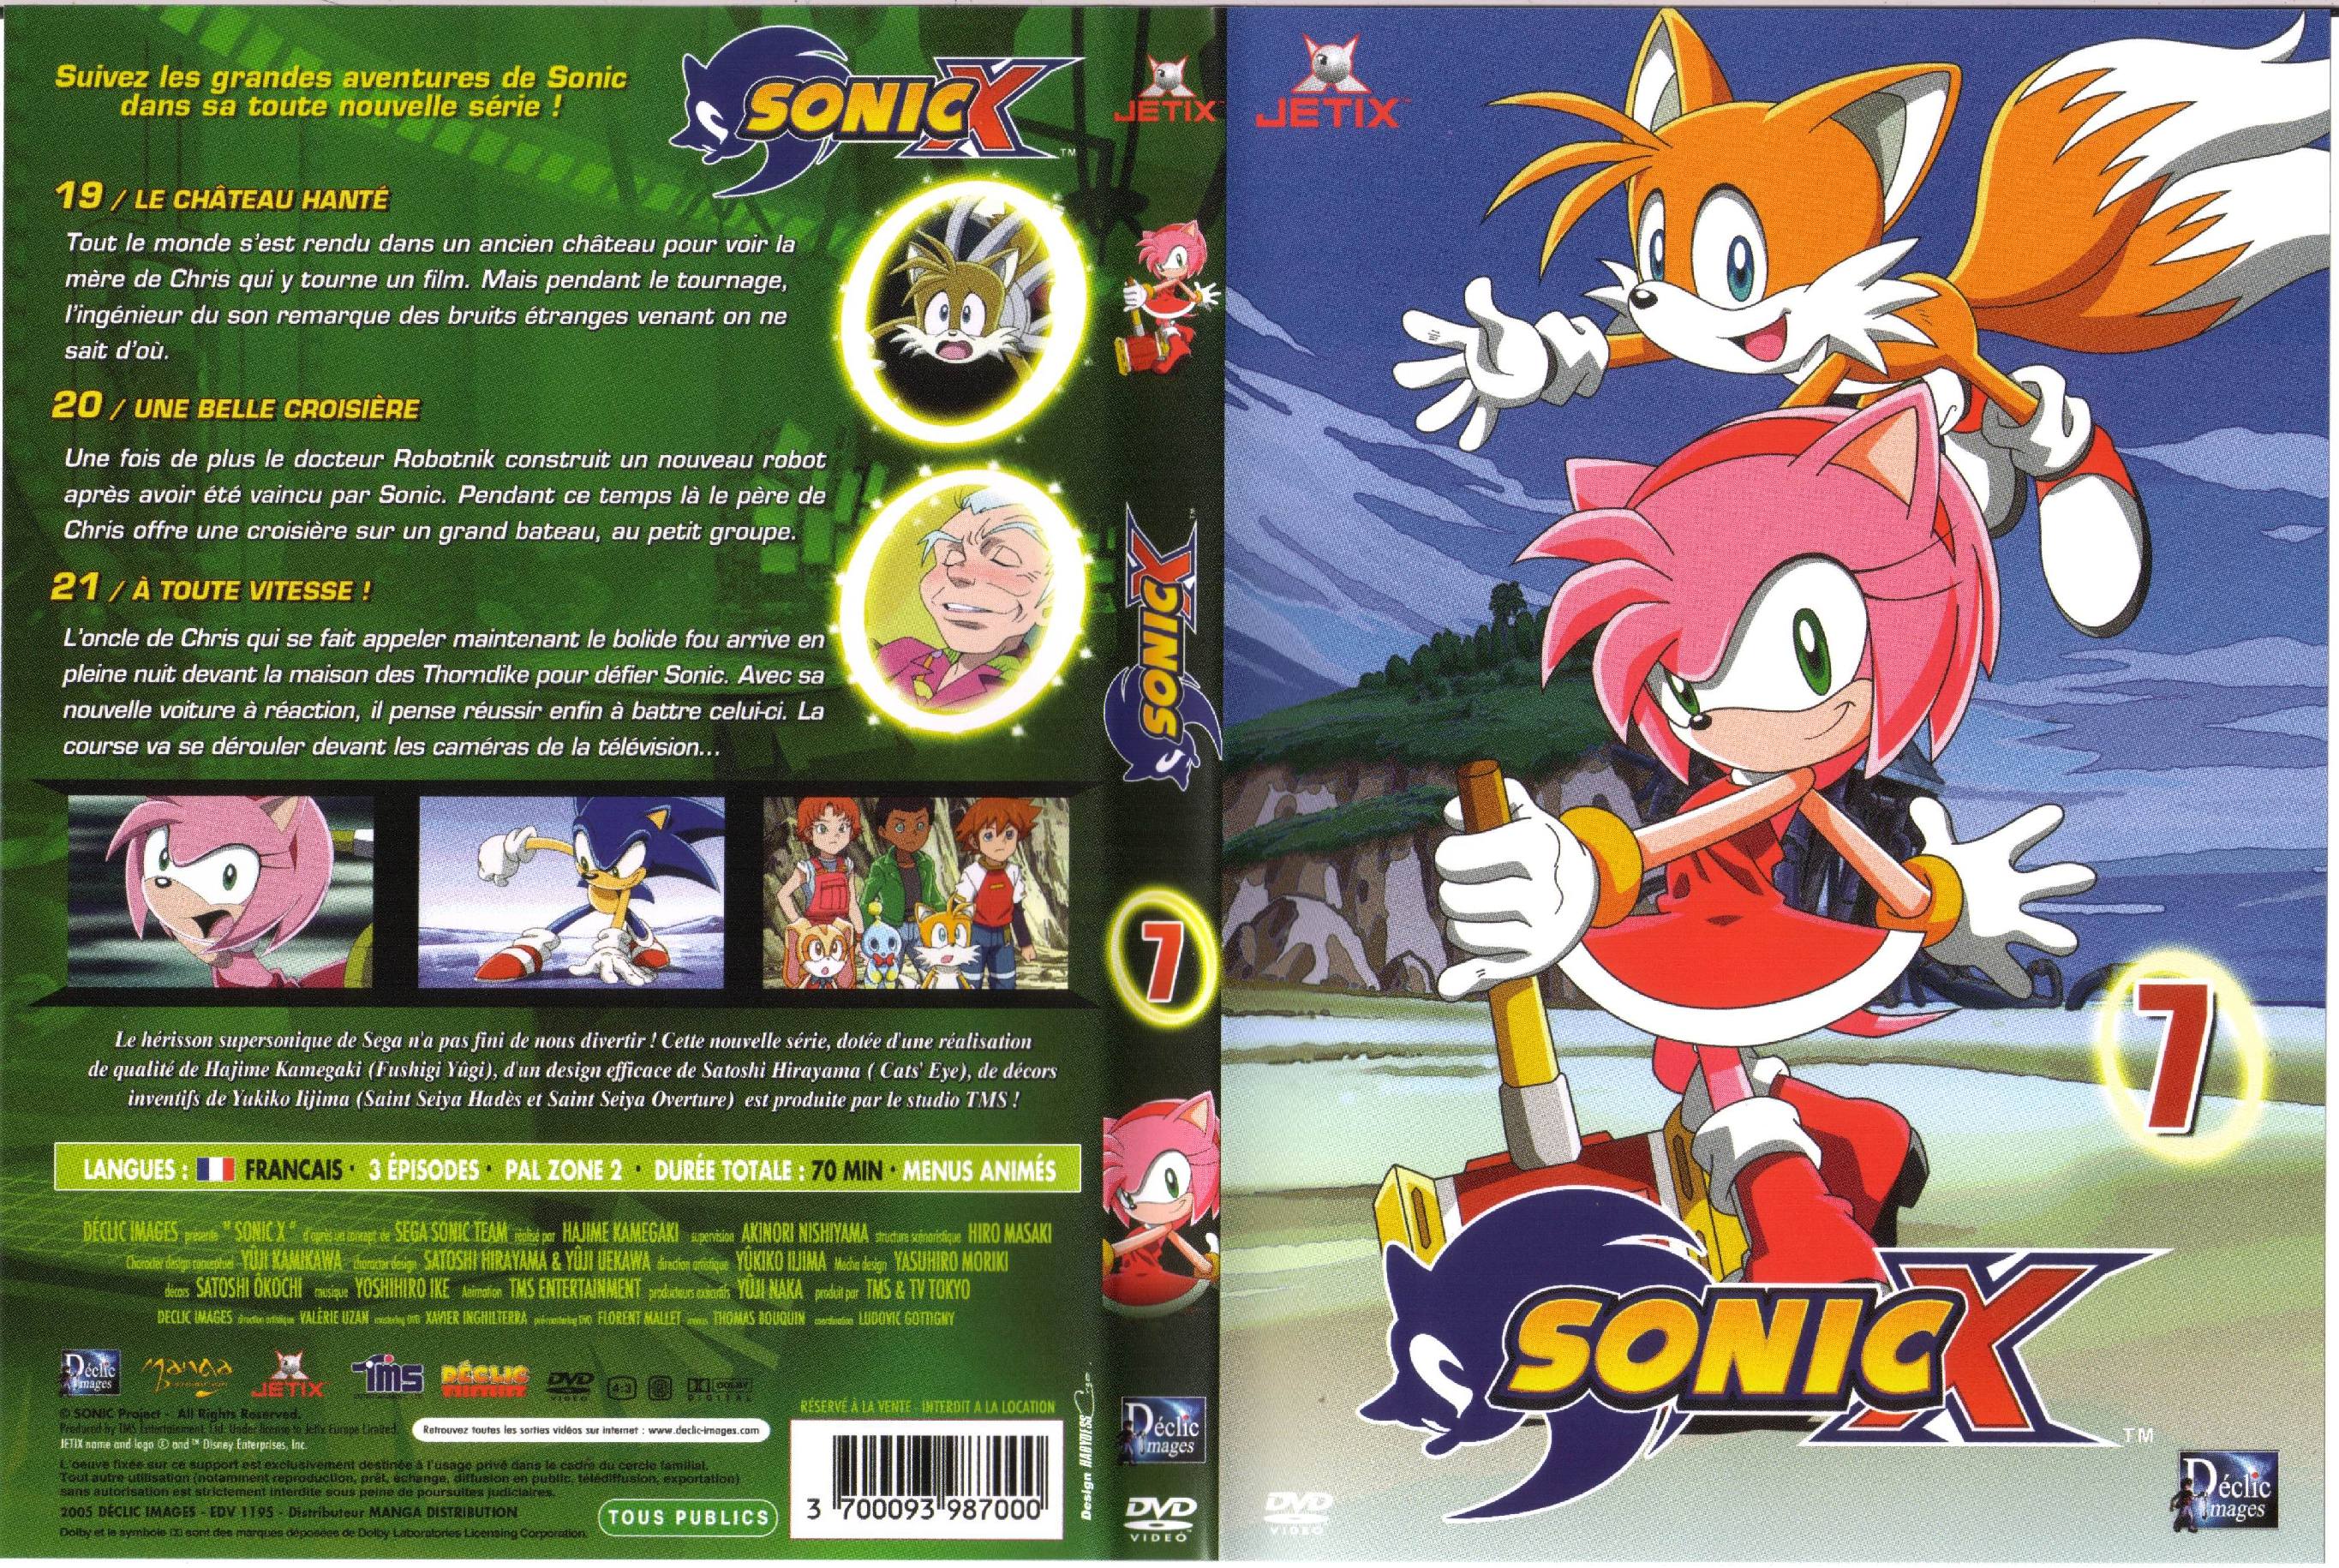 Sonic x dvd